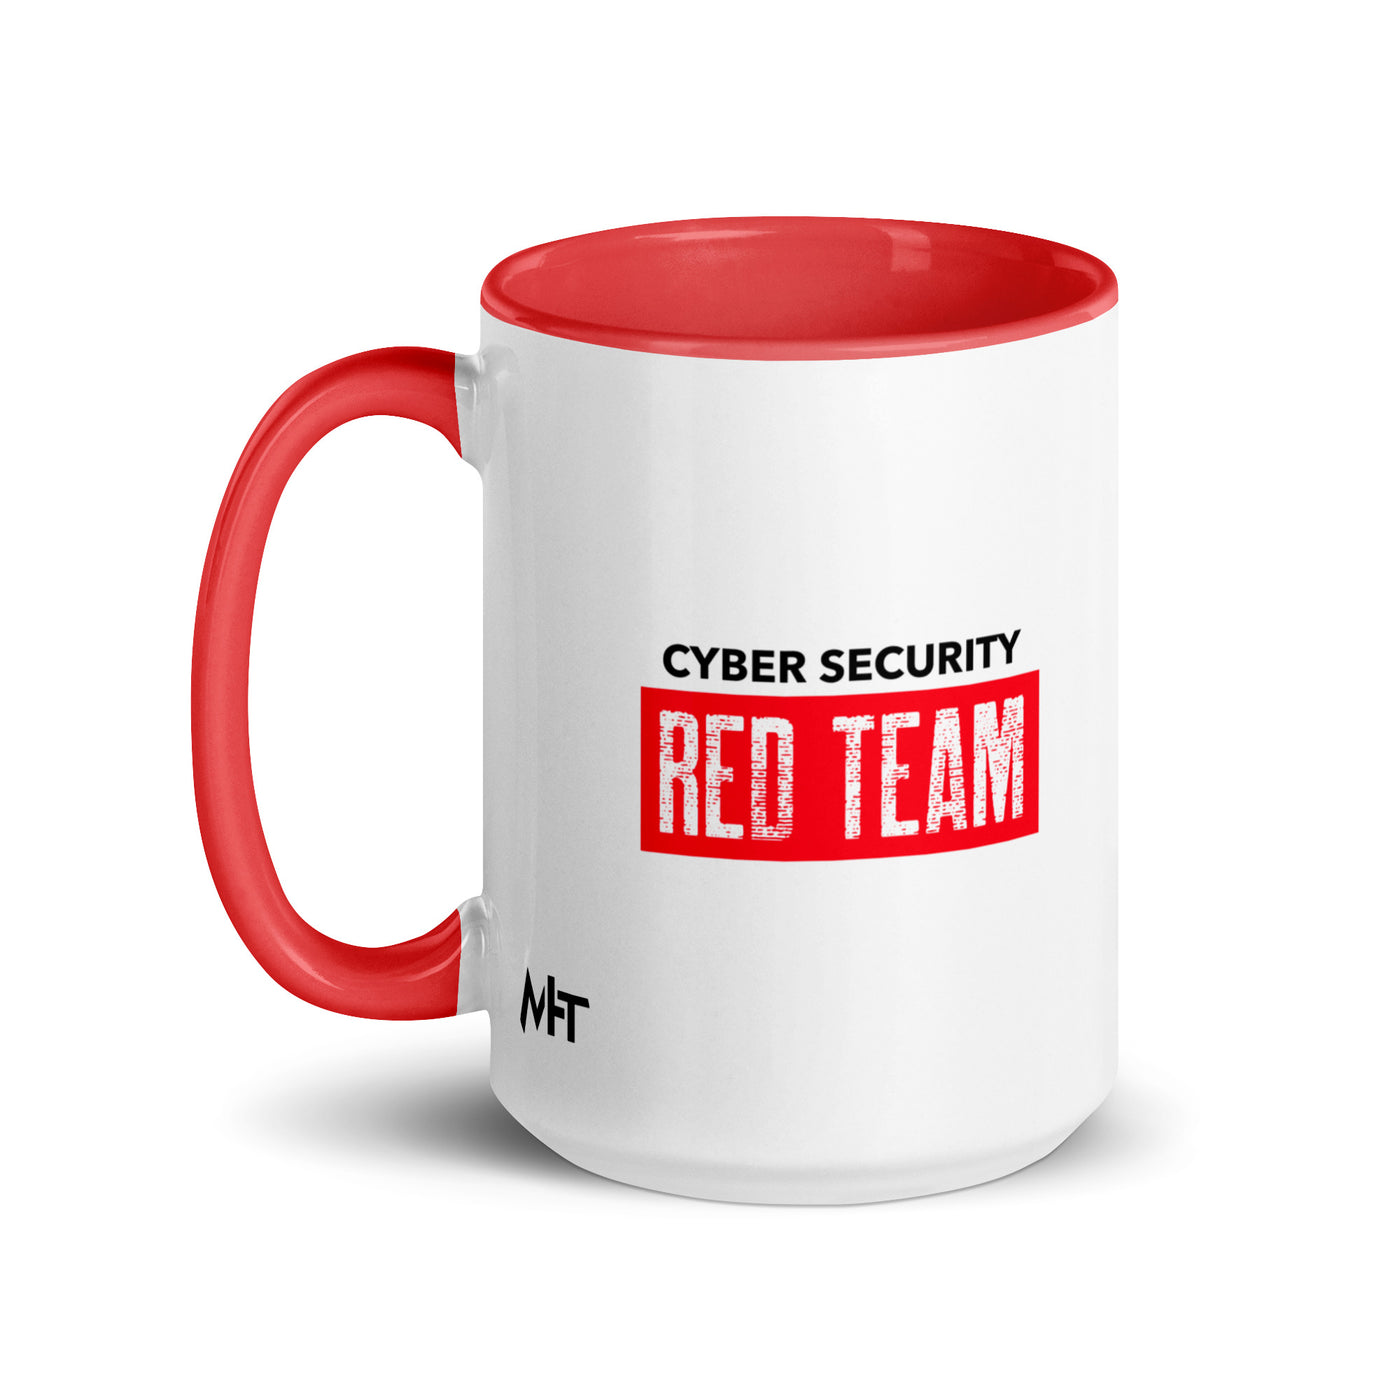 Cyber Security Red Team V1 - Mug with Color Inside